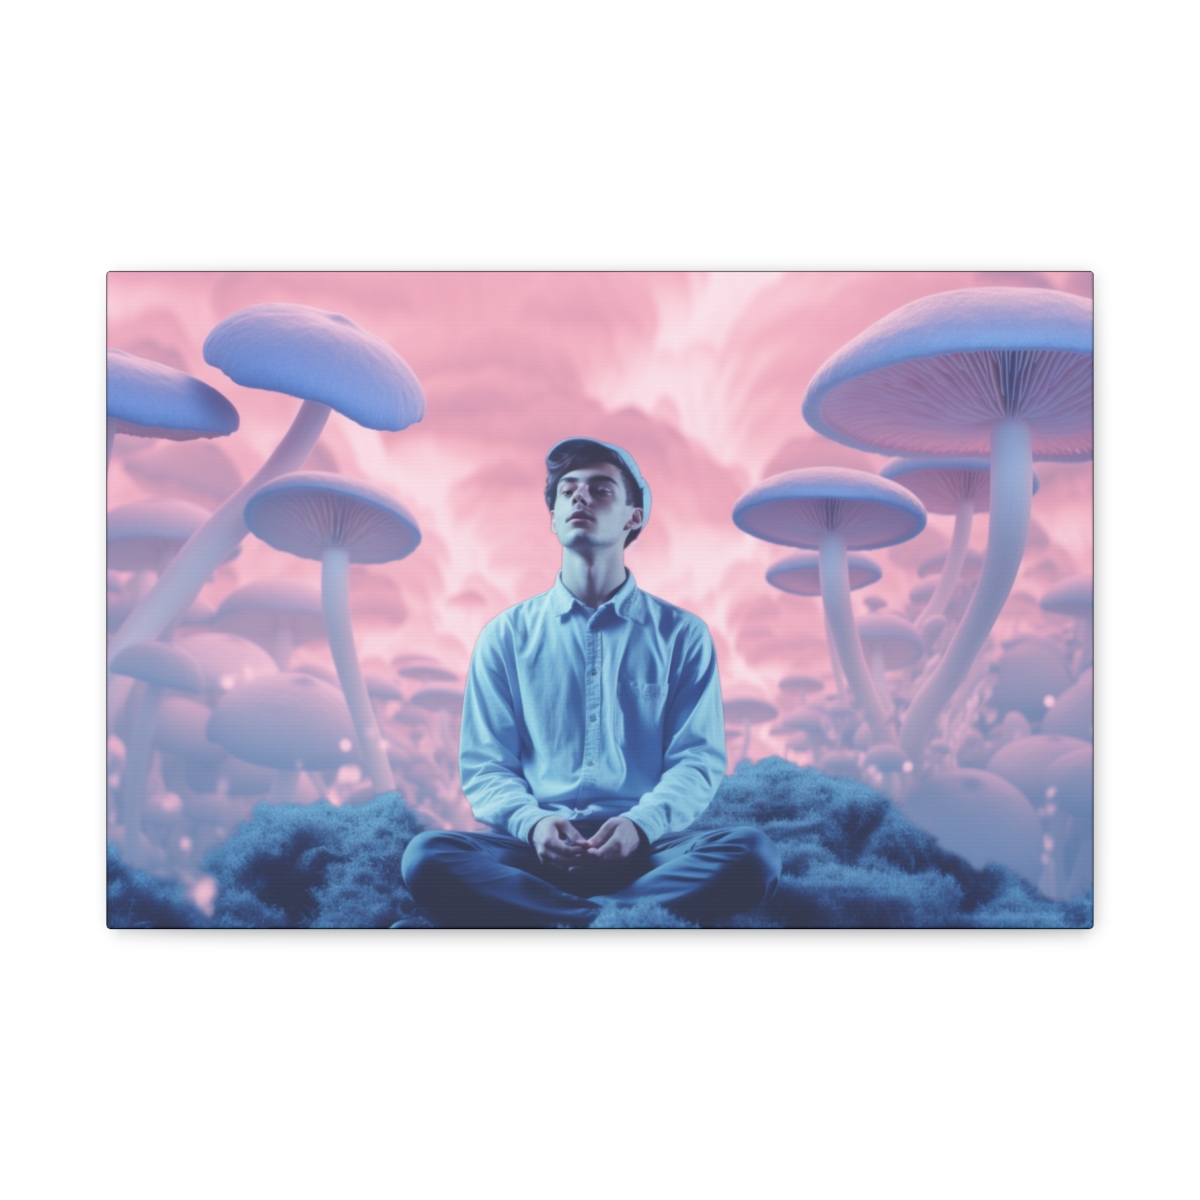 Psychedelic Mushroom Art: Gaining Wisdom